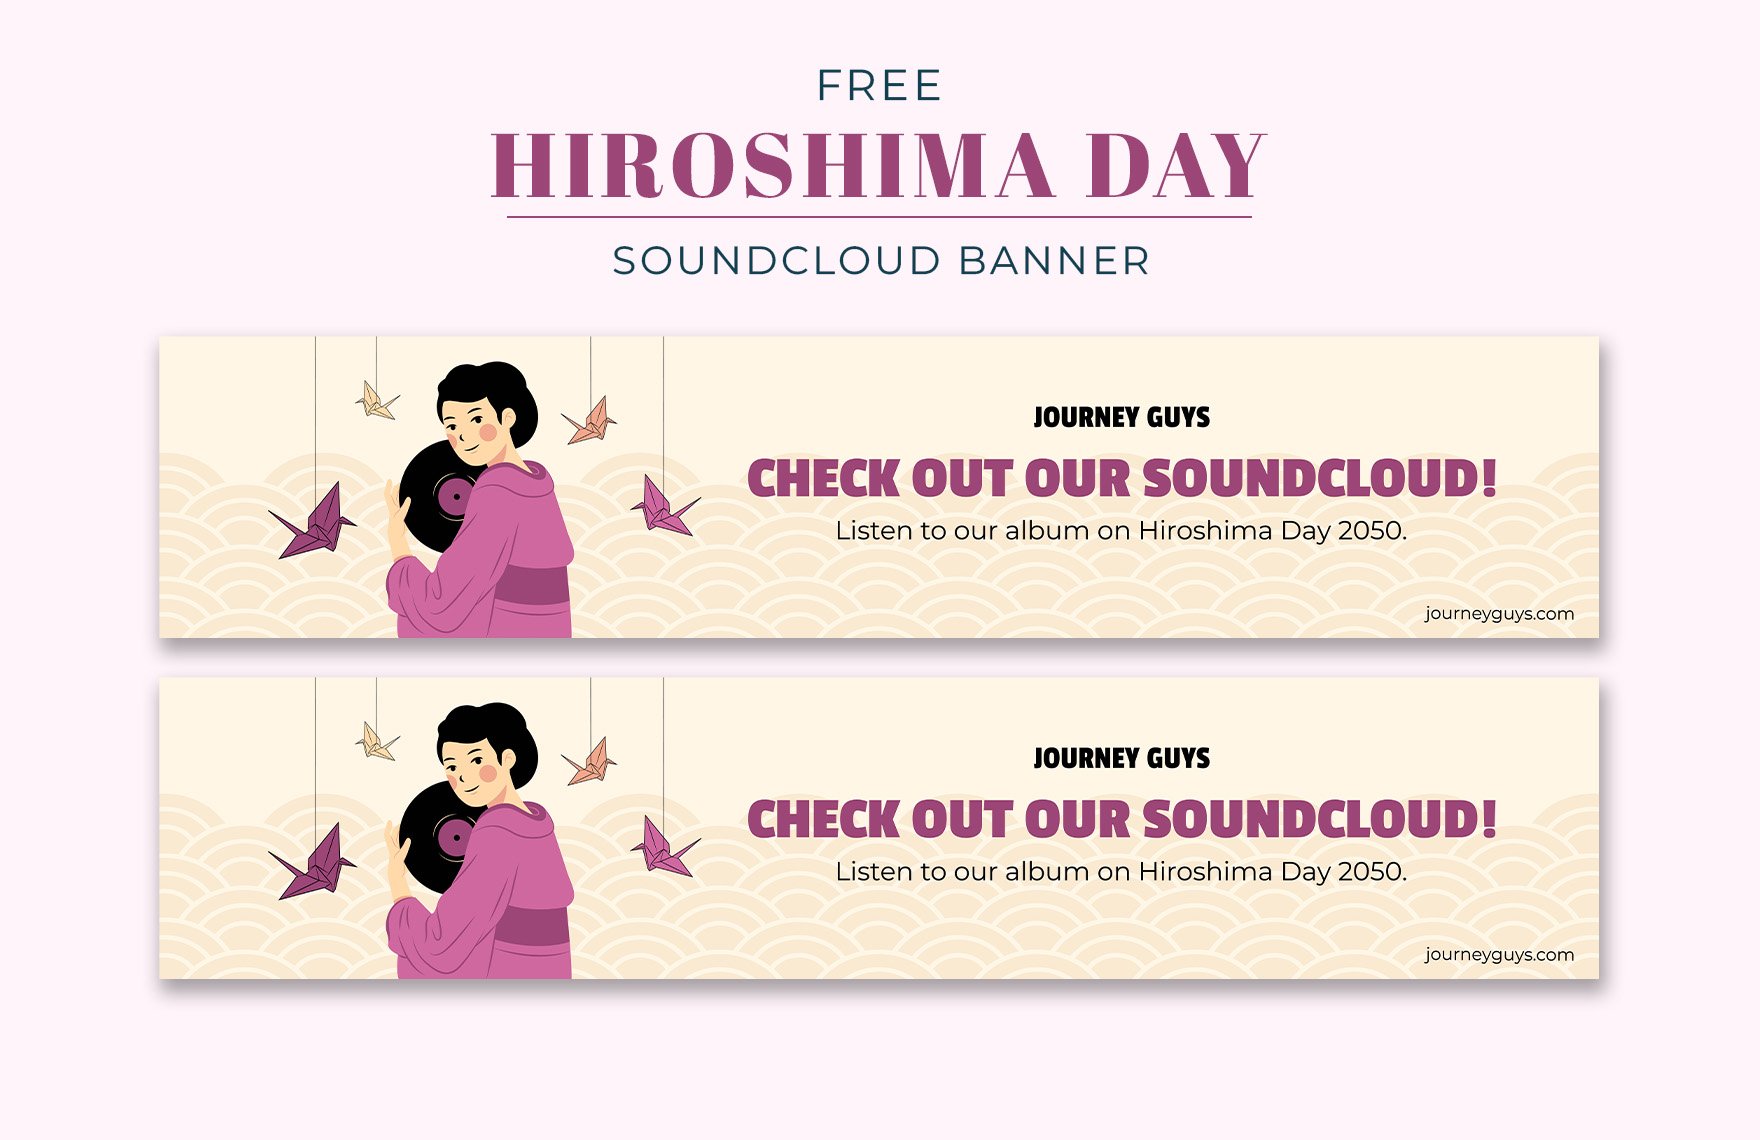 Free Hiroshima Day Soundcloud Banner in PDF, Illustrator, SVG, JPG